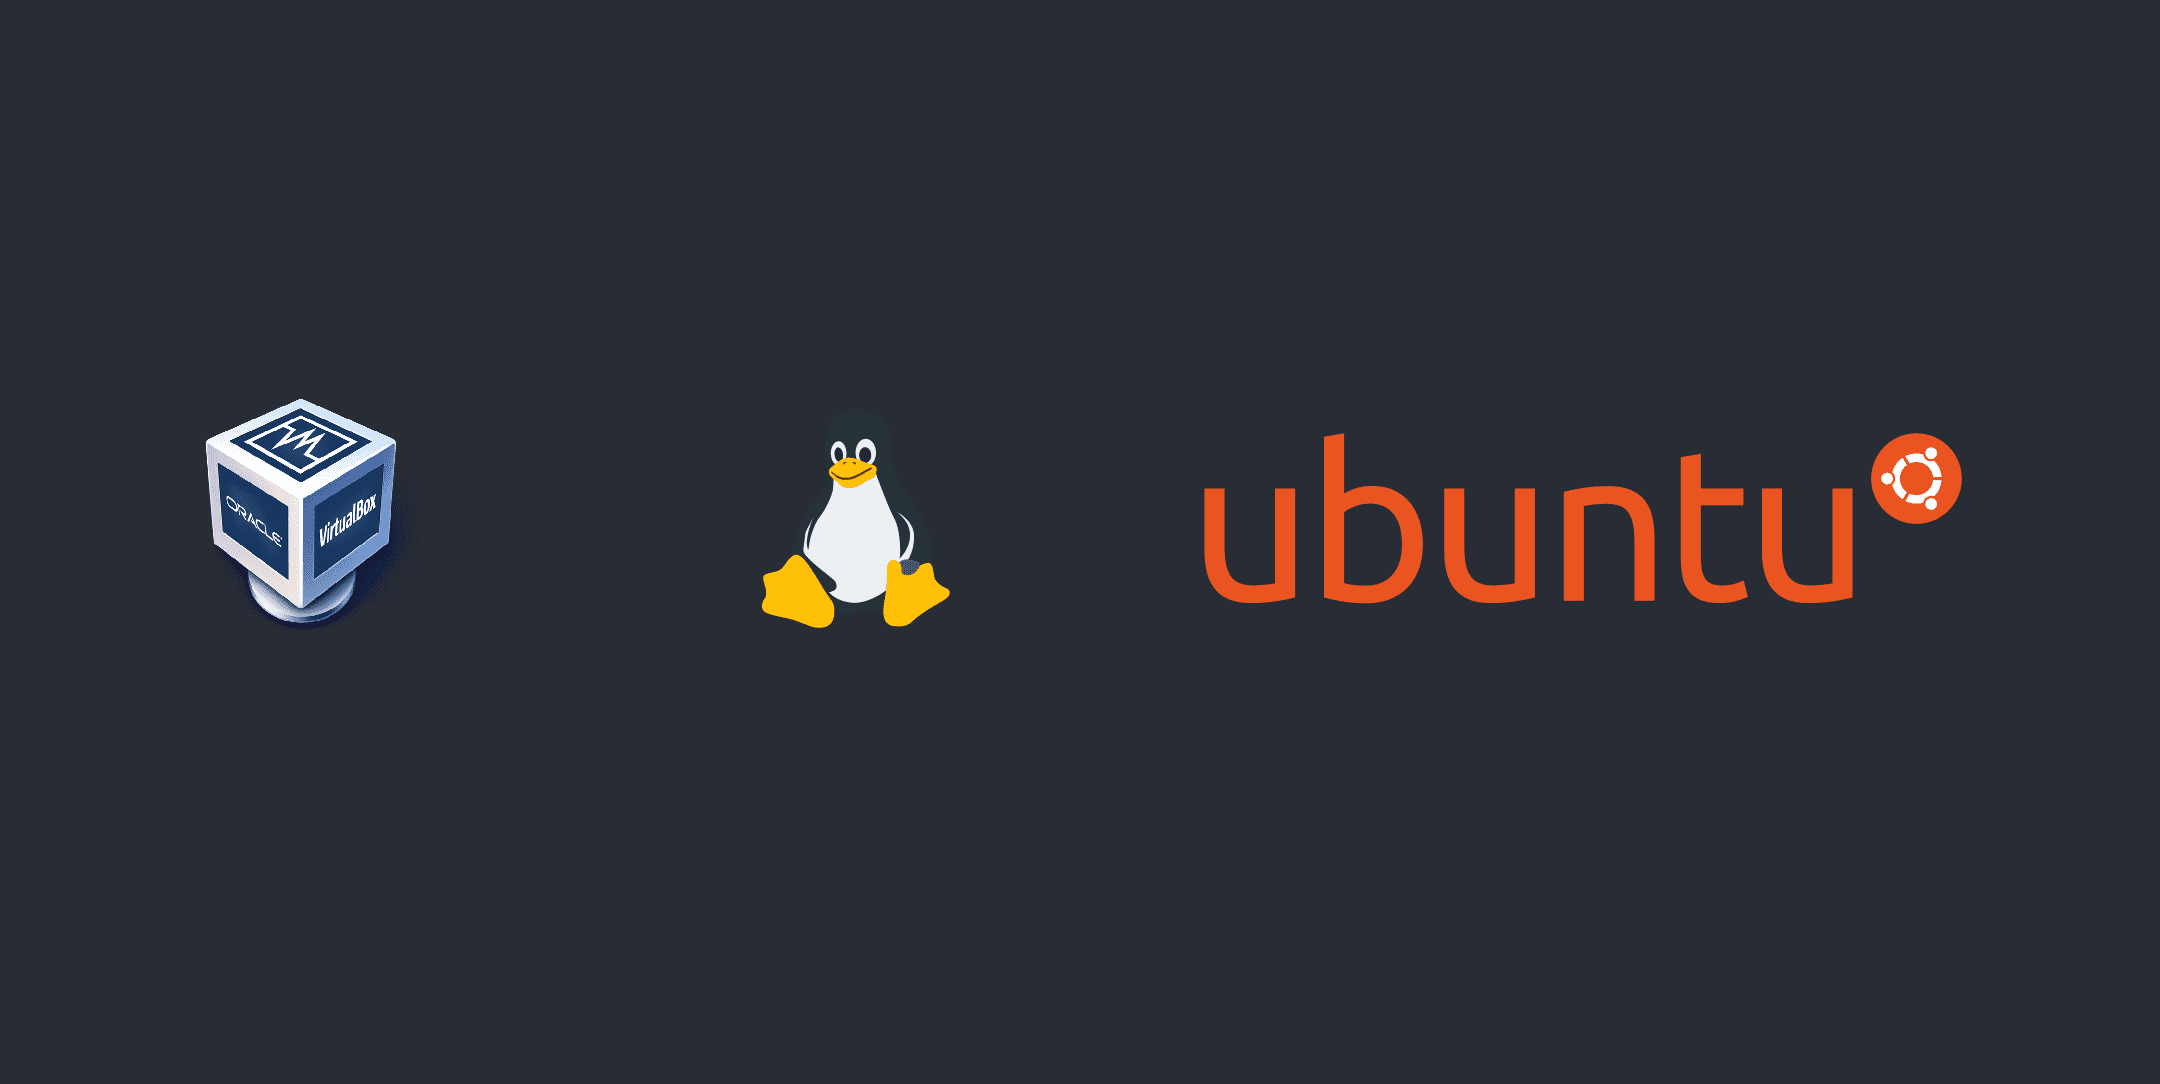 ubuntu virtual machine